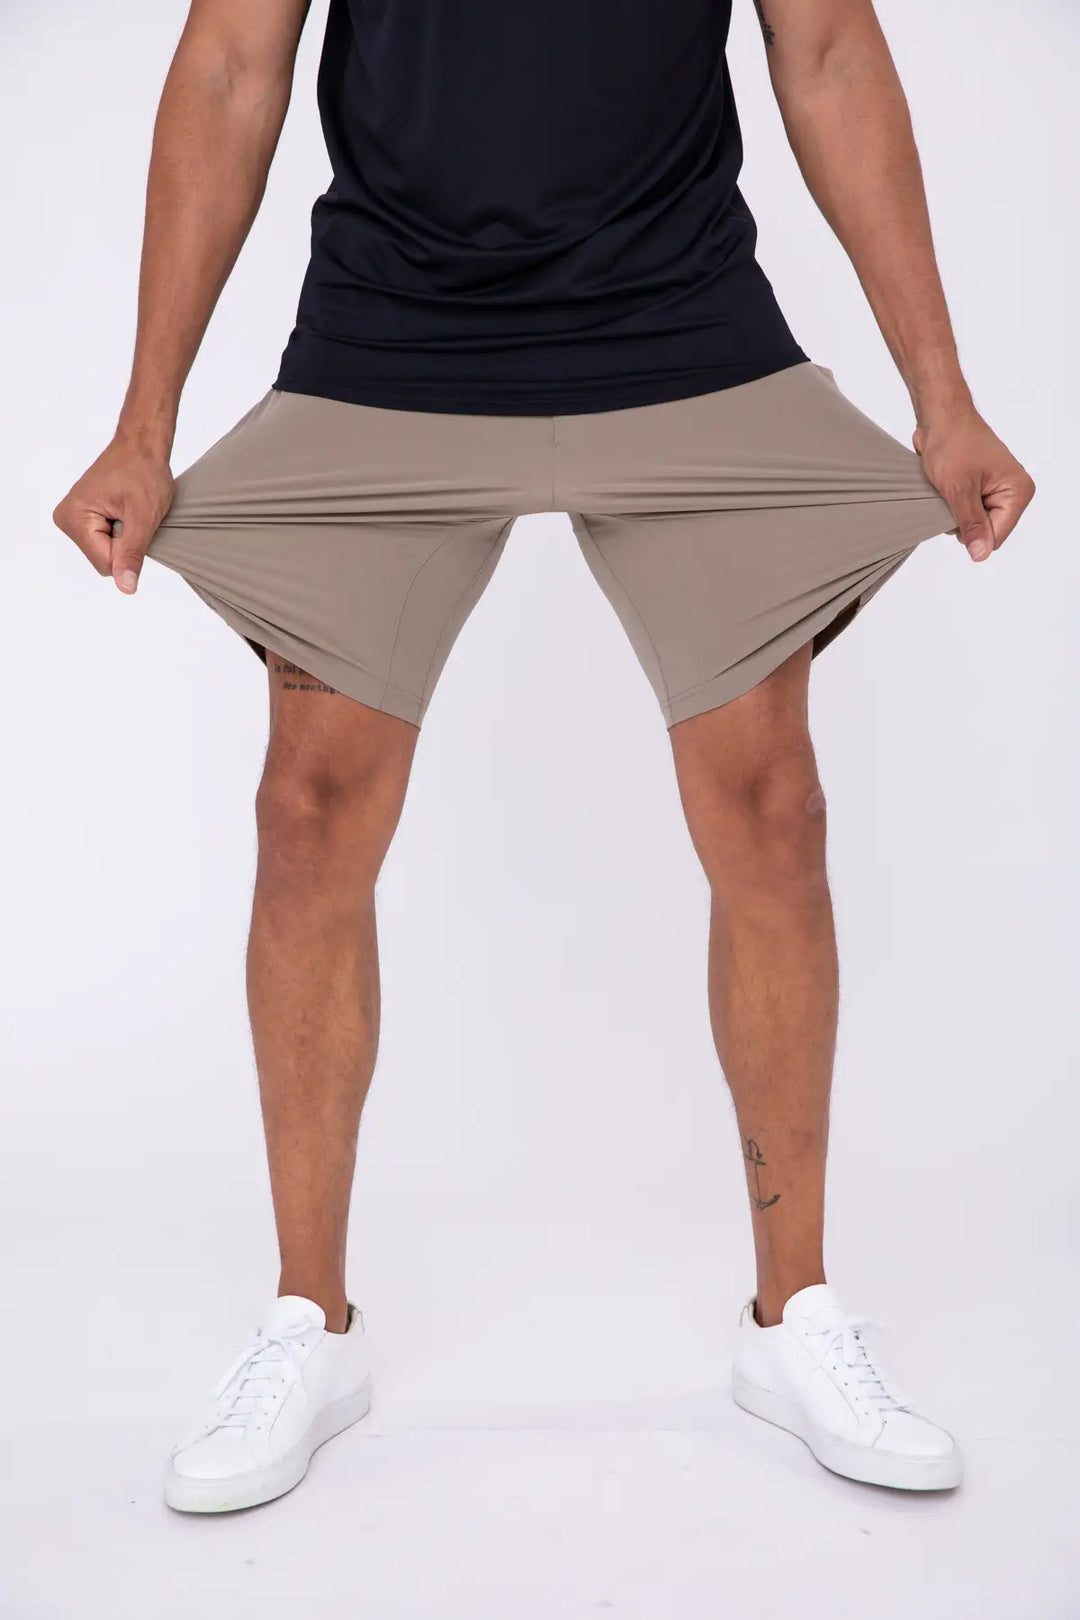 Drawstring Shorts with Pockets (MBA0830)